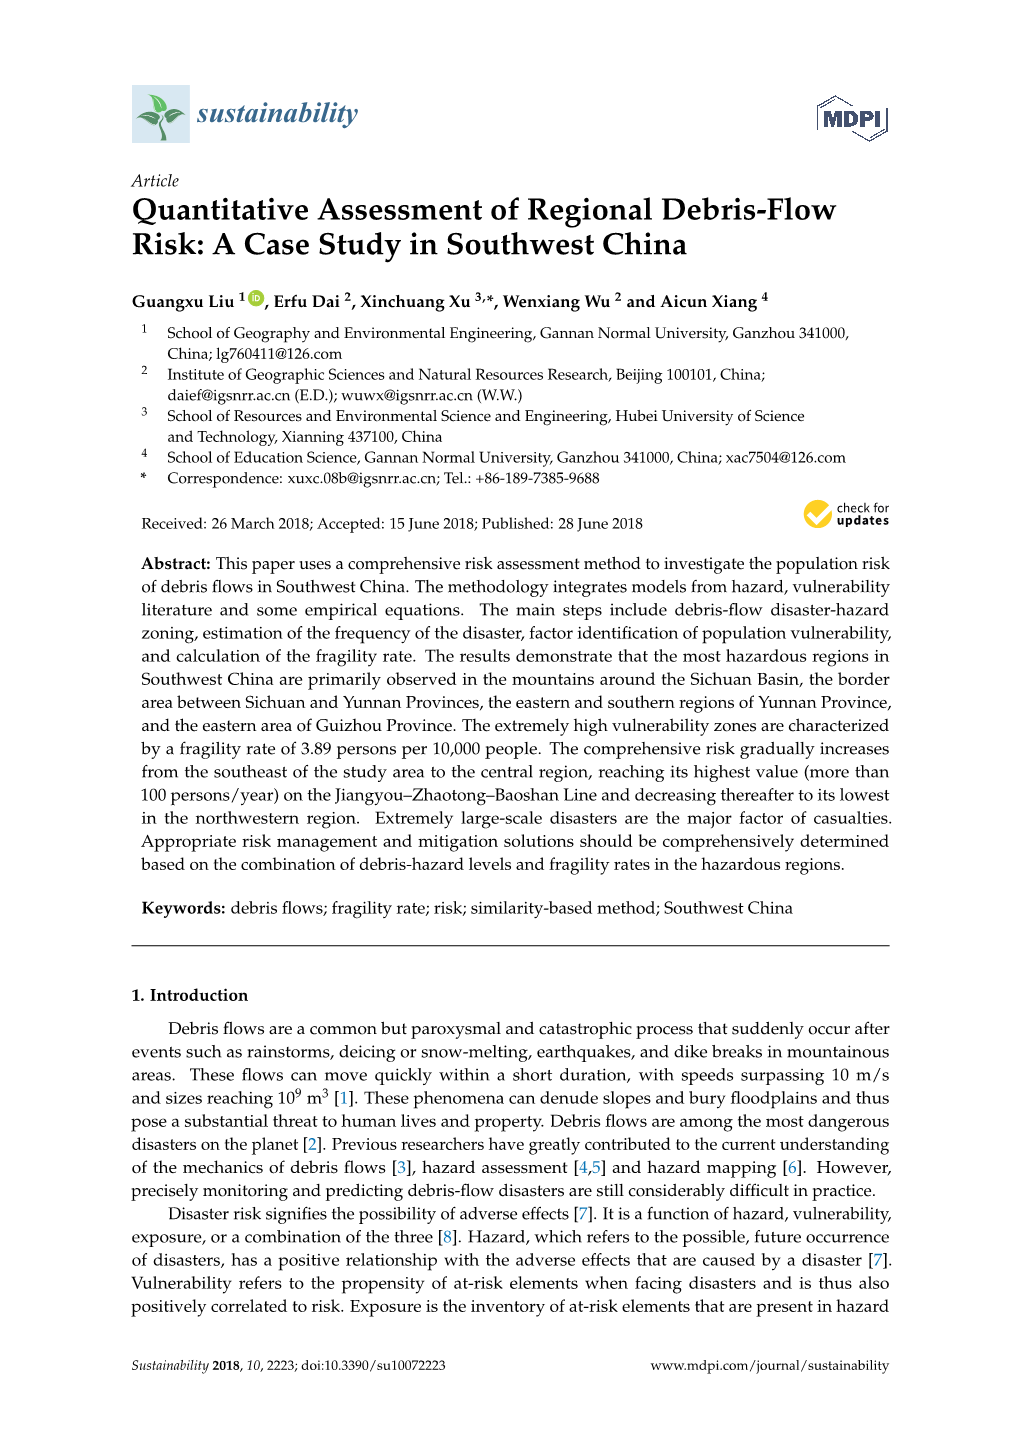 Quantitative Assessment of Regional Debris-Flow Risk: a Case Study in Southwest China